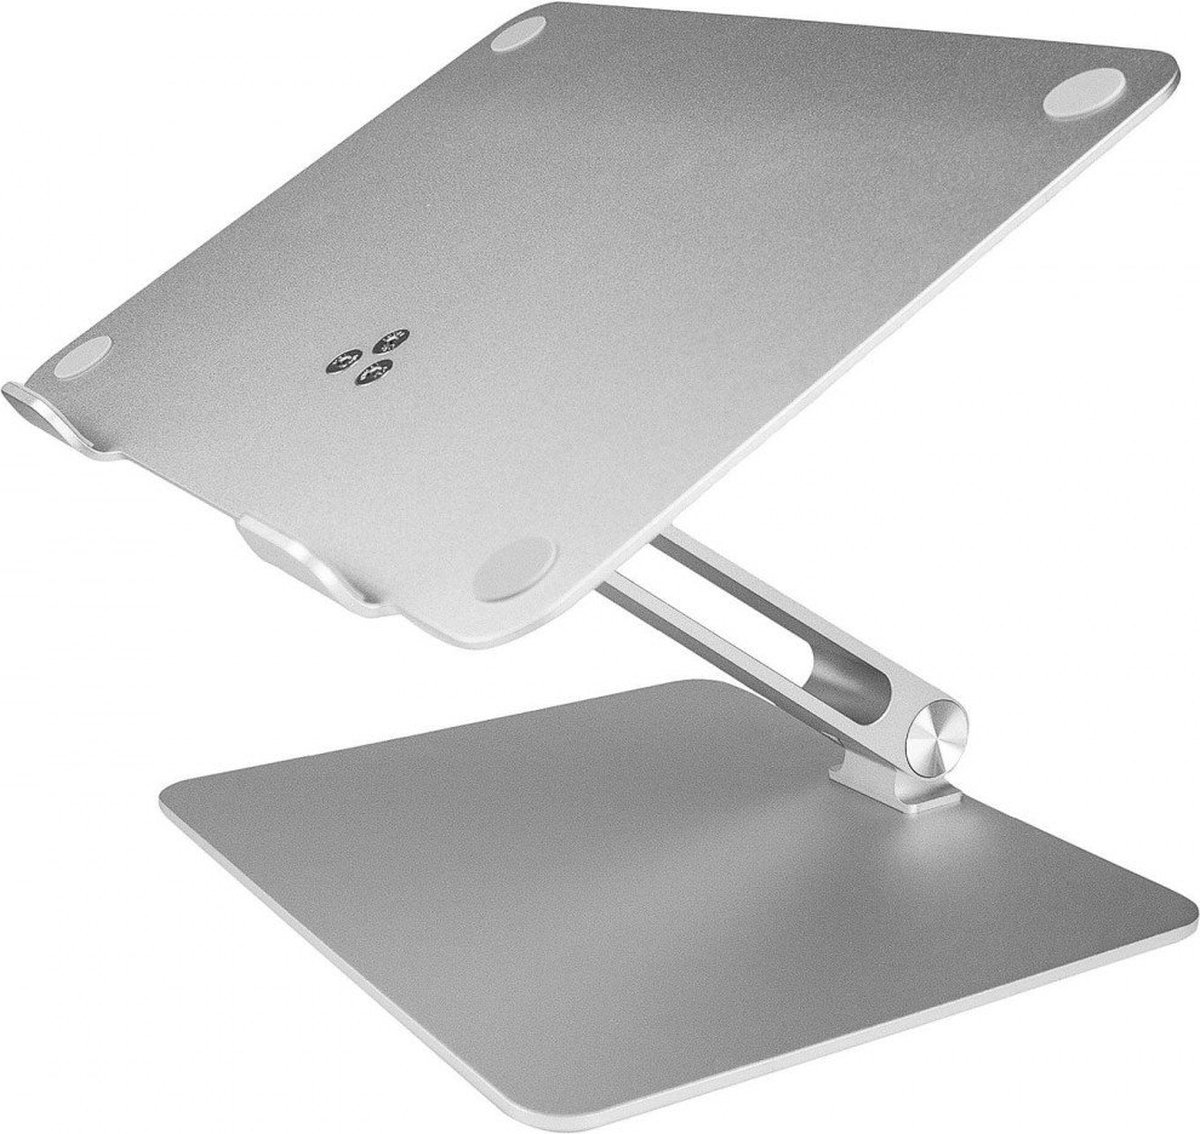 Laptopstandaard, 7 tot 17 inch - 28 cm